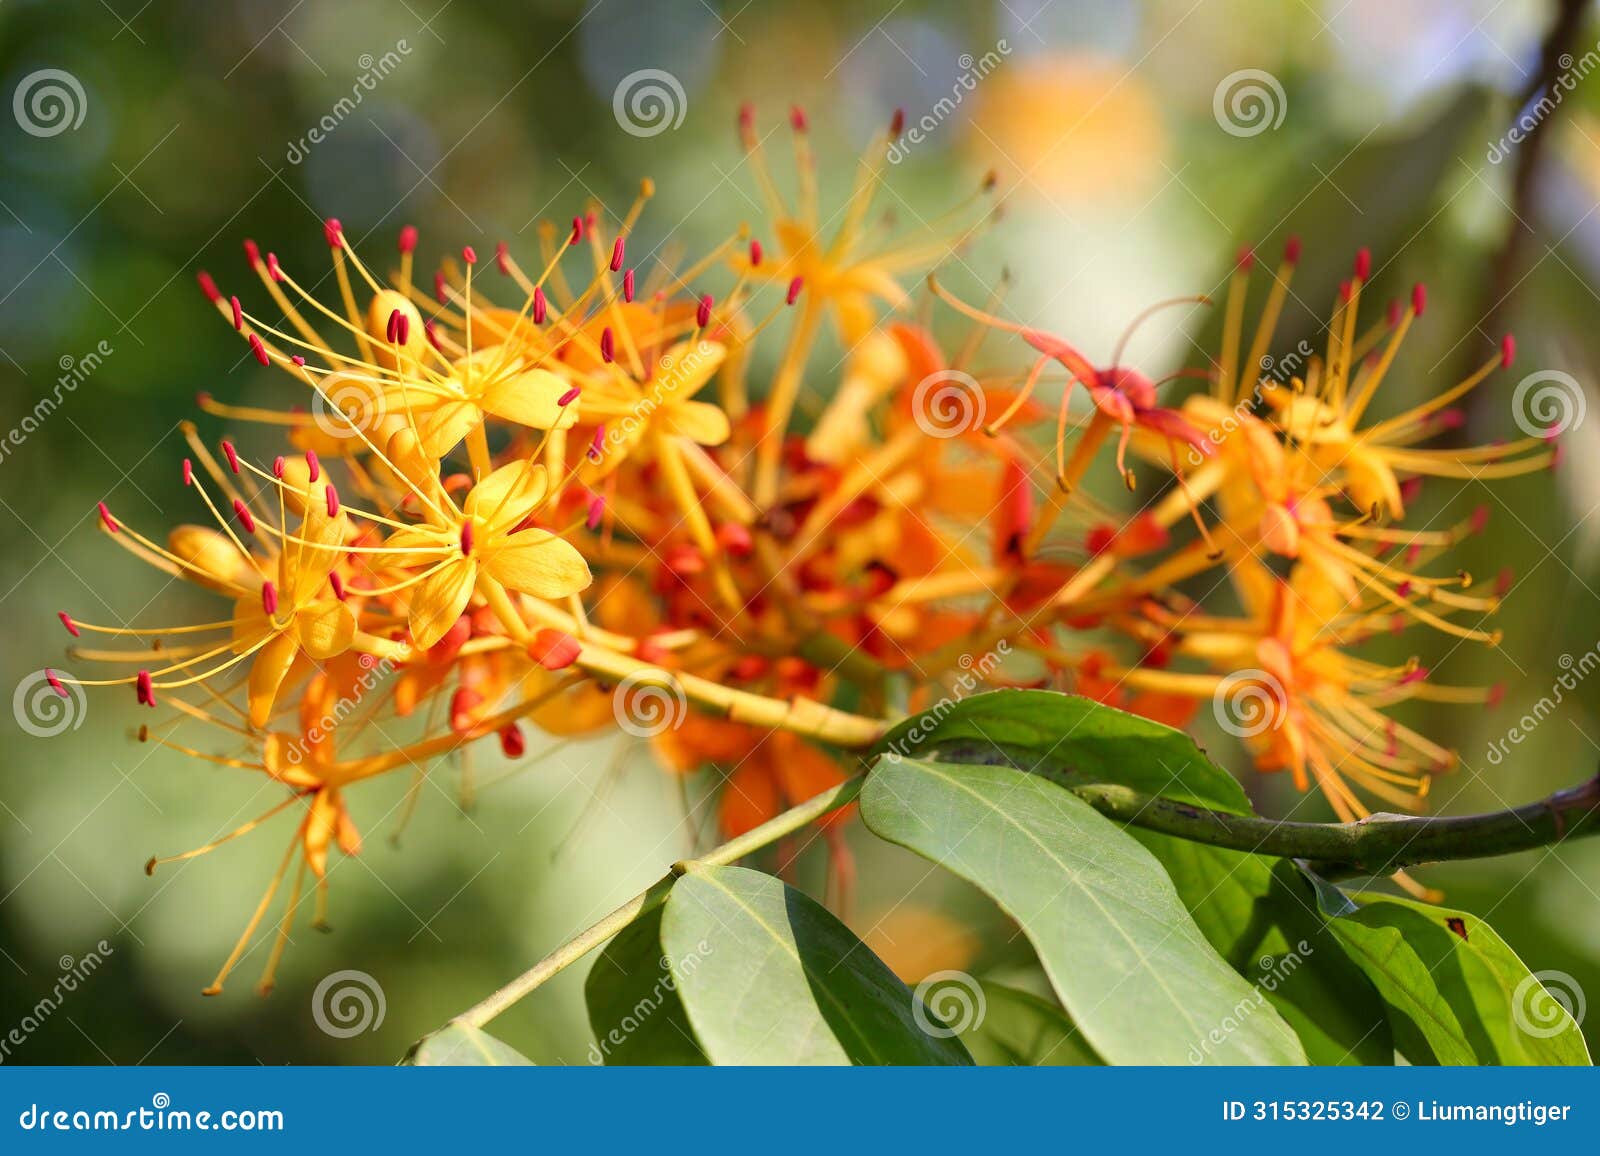 the flowers of saraca dives pierre tree(worry free tree)